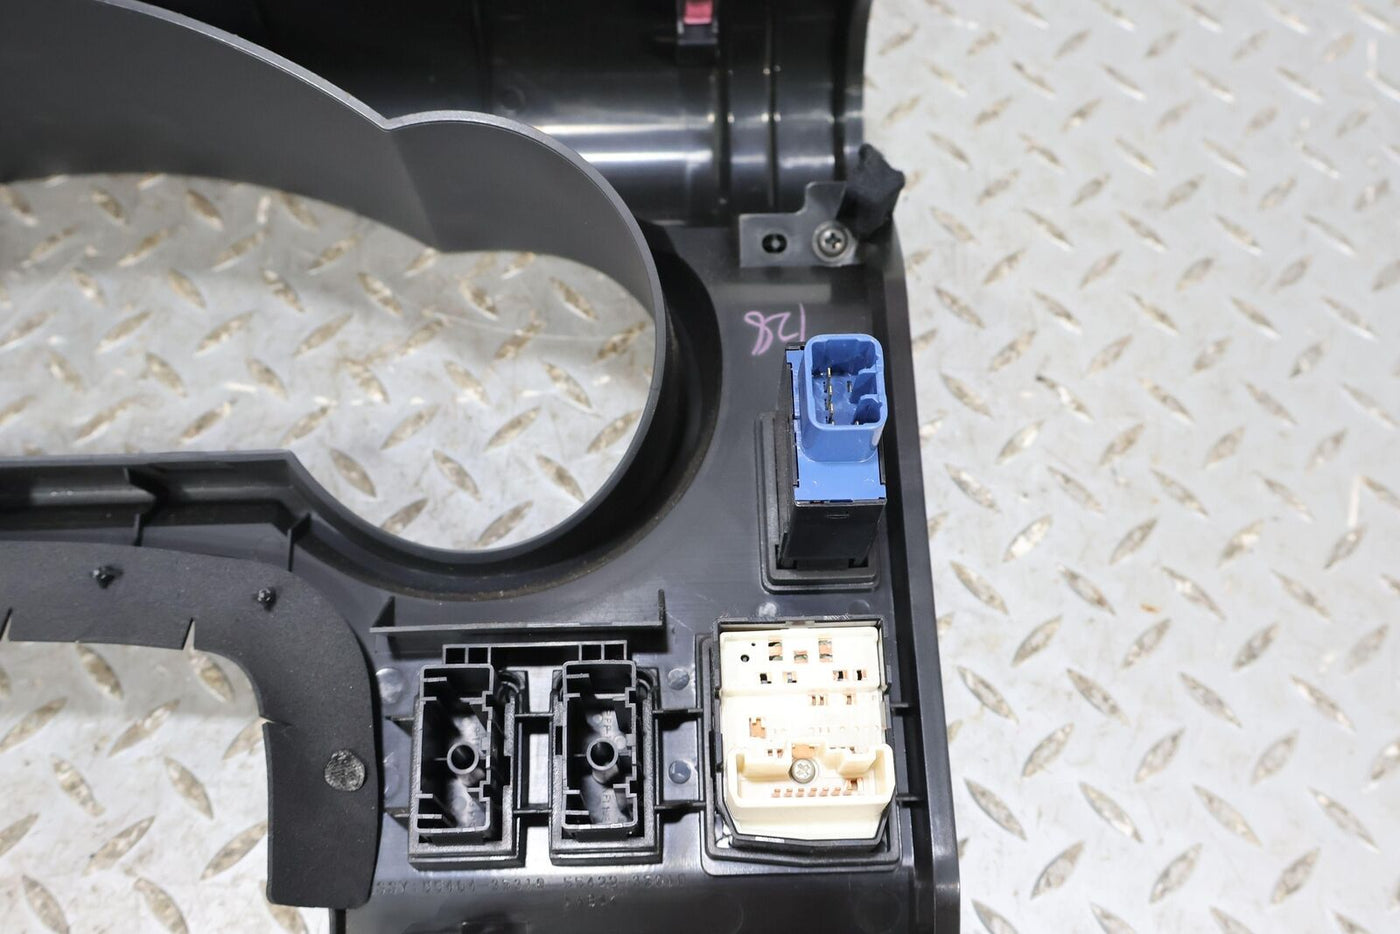 07-14 Toyota FJ Cruiser Speedometer Trim Bezel (Dark Charcoal AA) W/Switches